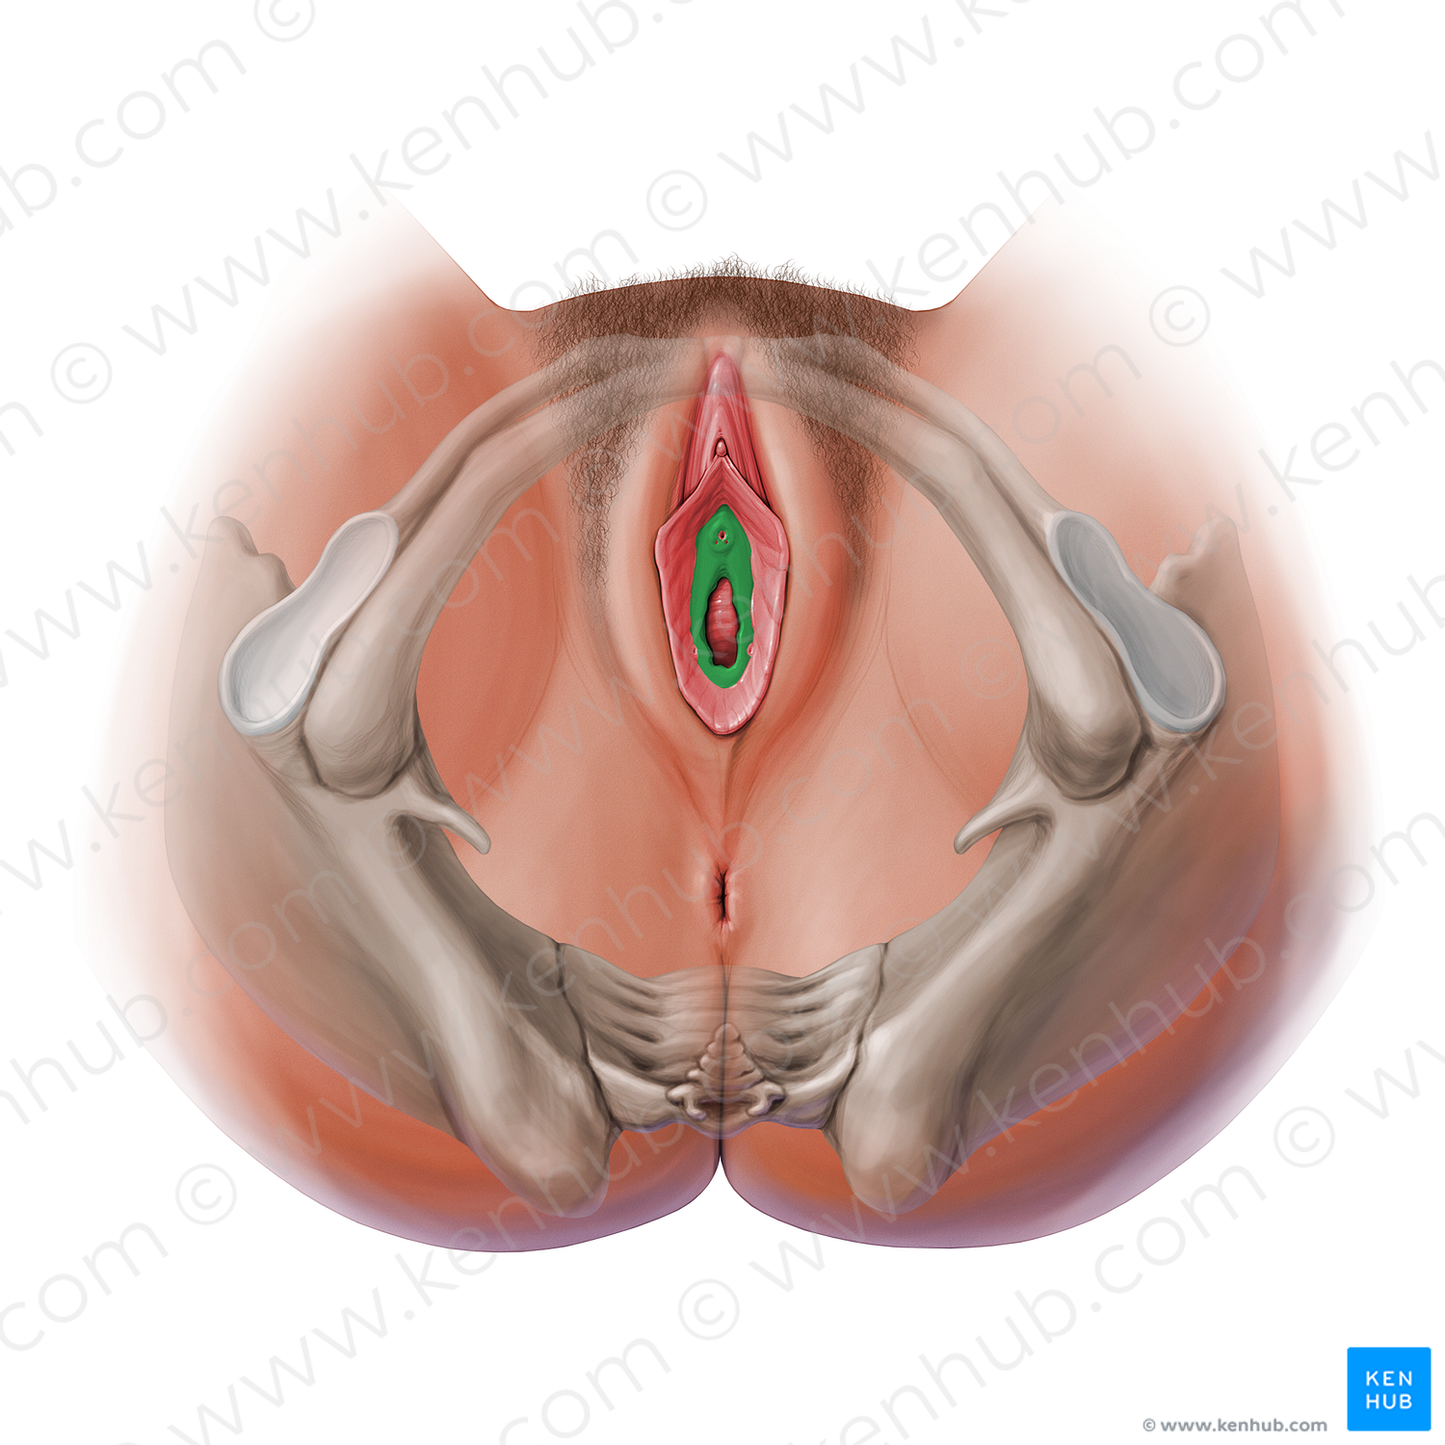 Vestibule of vagina (#13847)